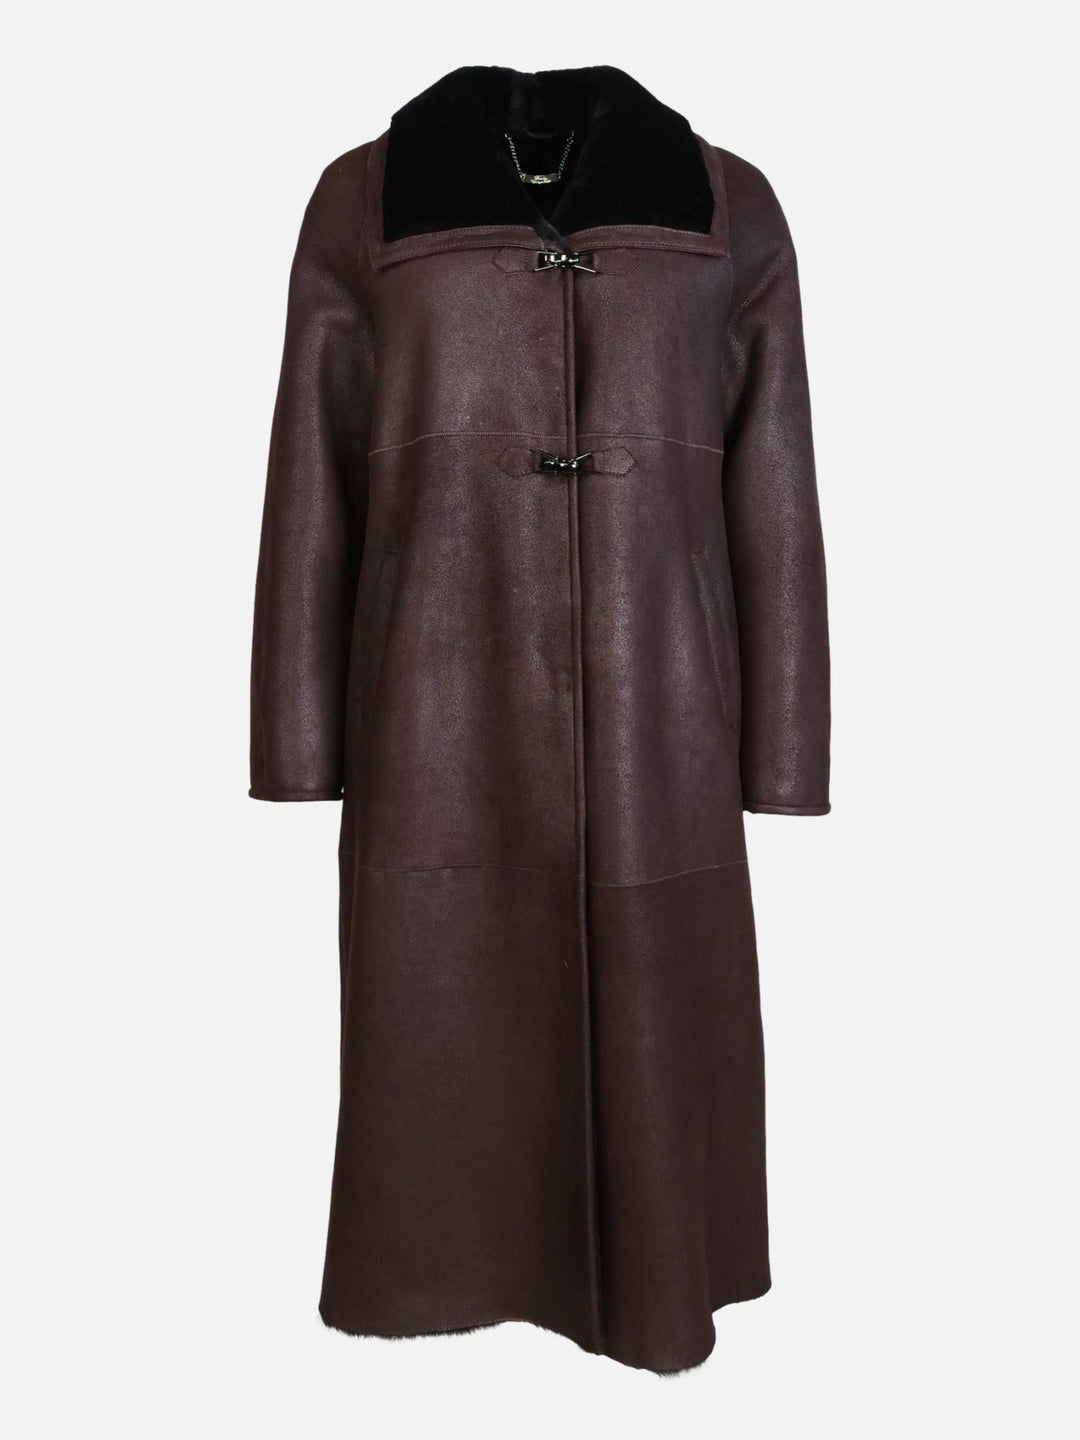 Hilma 110 cm. Rulams frakke - Dame - Mørke brun